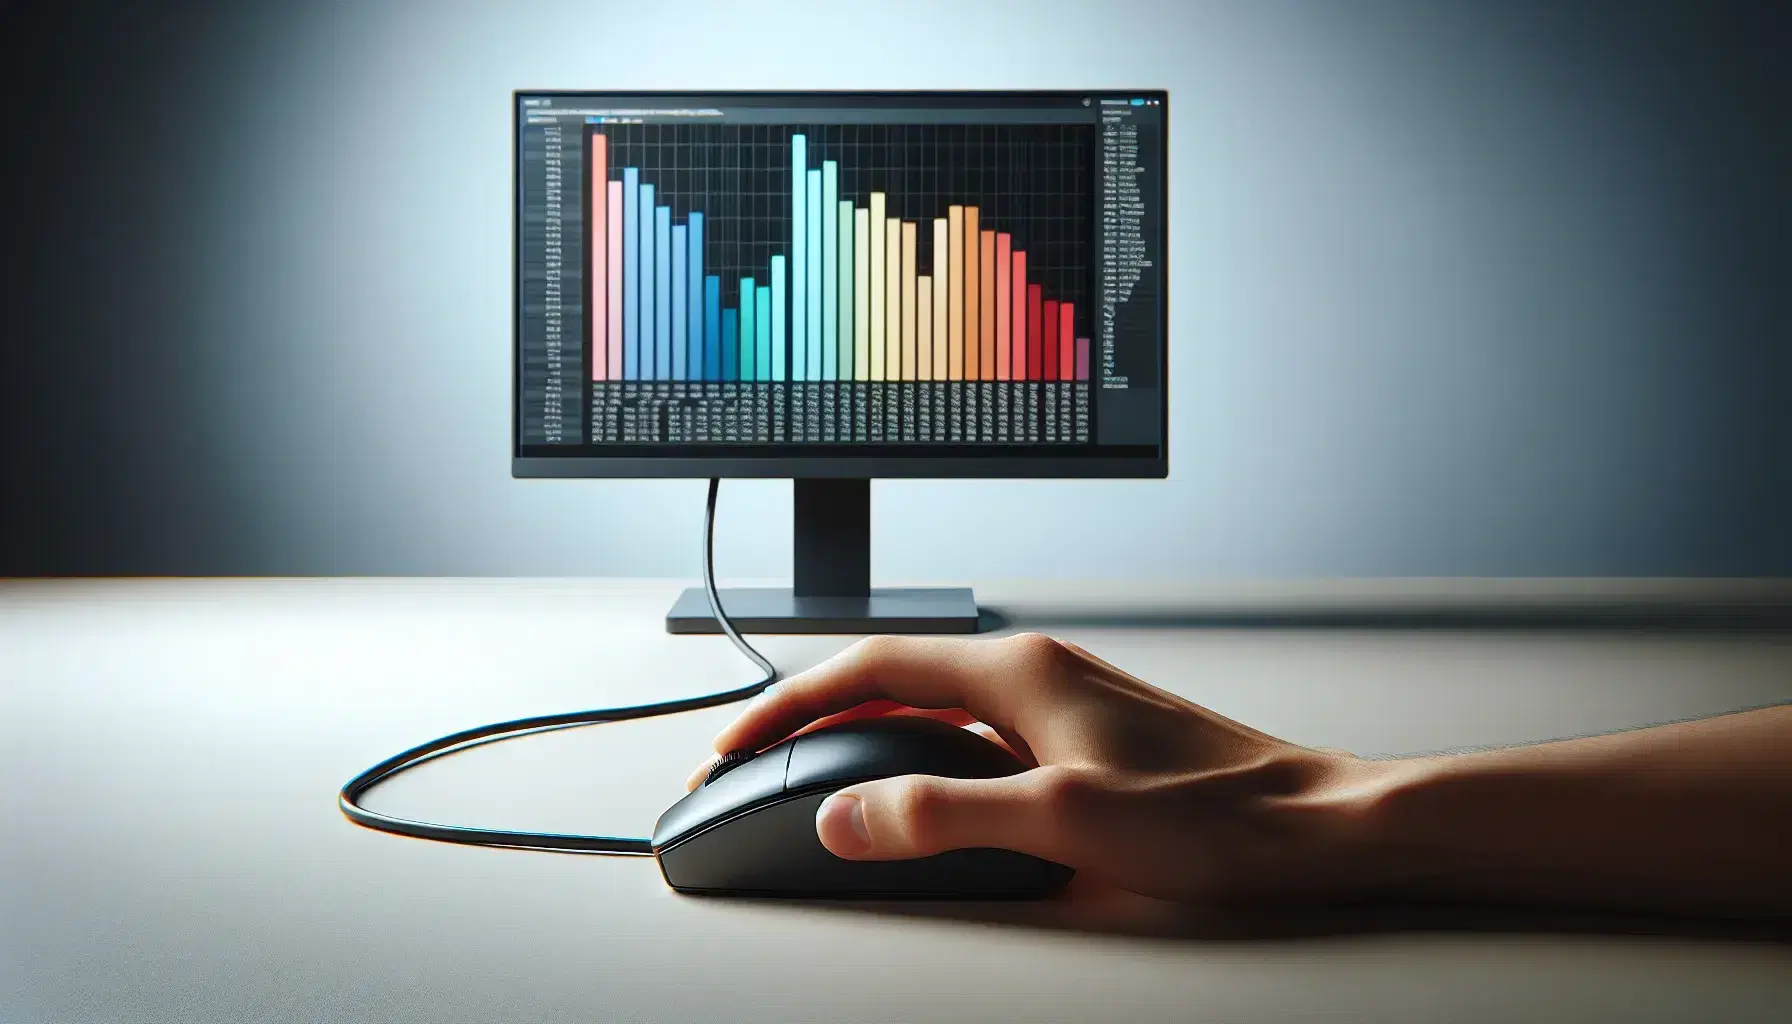 Mano sujetando ratón de computadora negro sobre superficie clara con monitor mostrando gráfico de barras colorido sin texto.